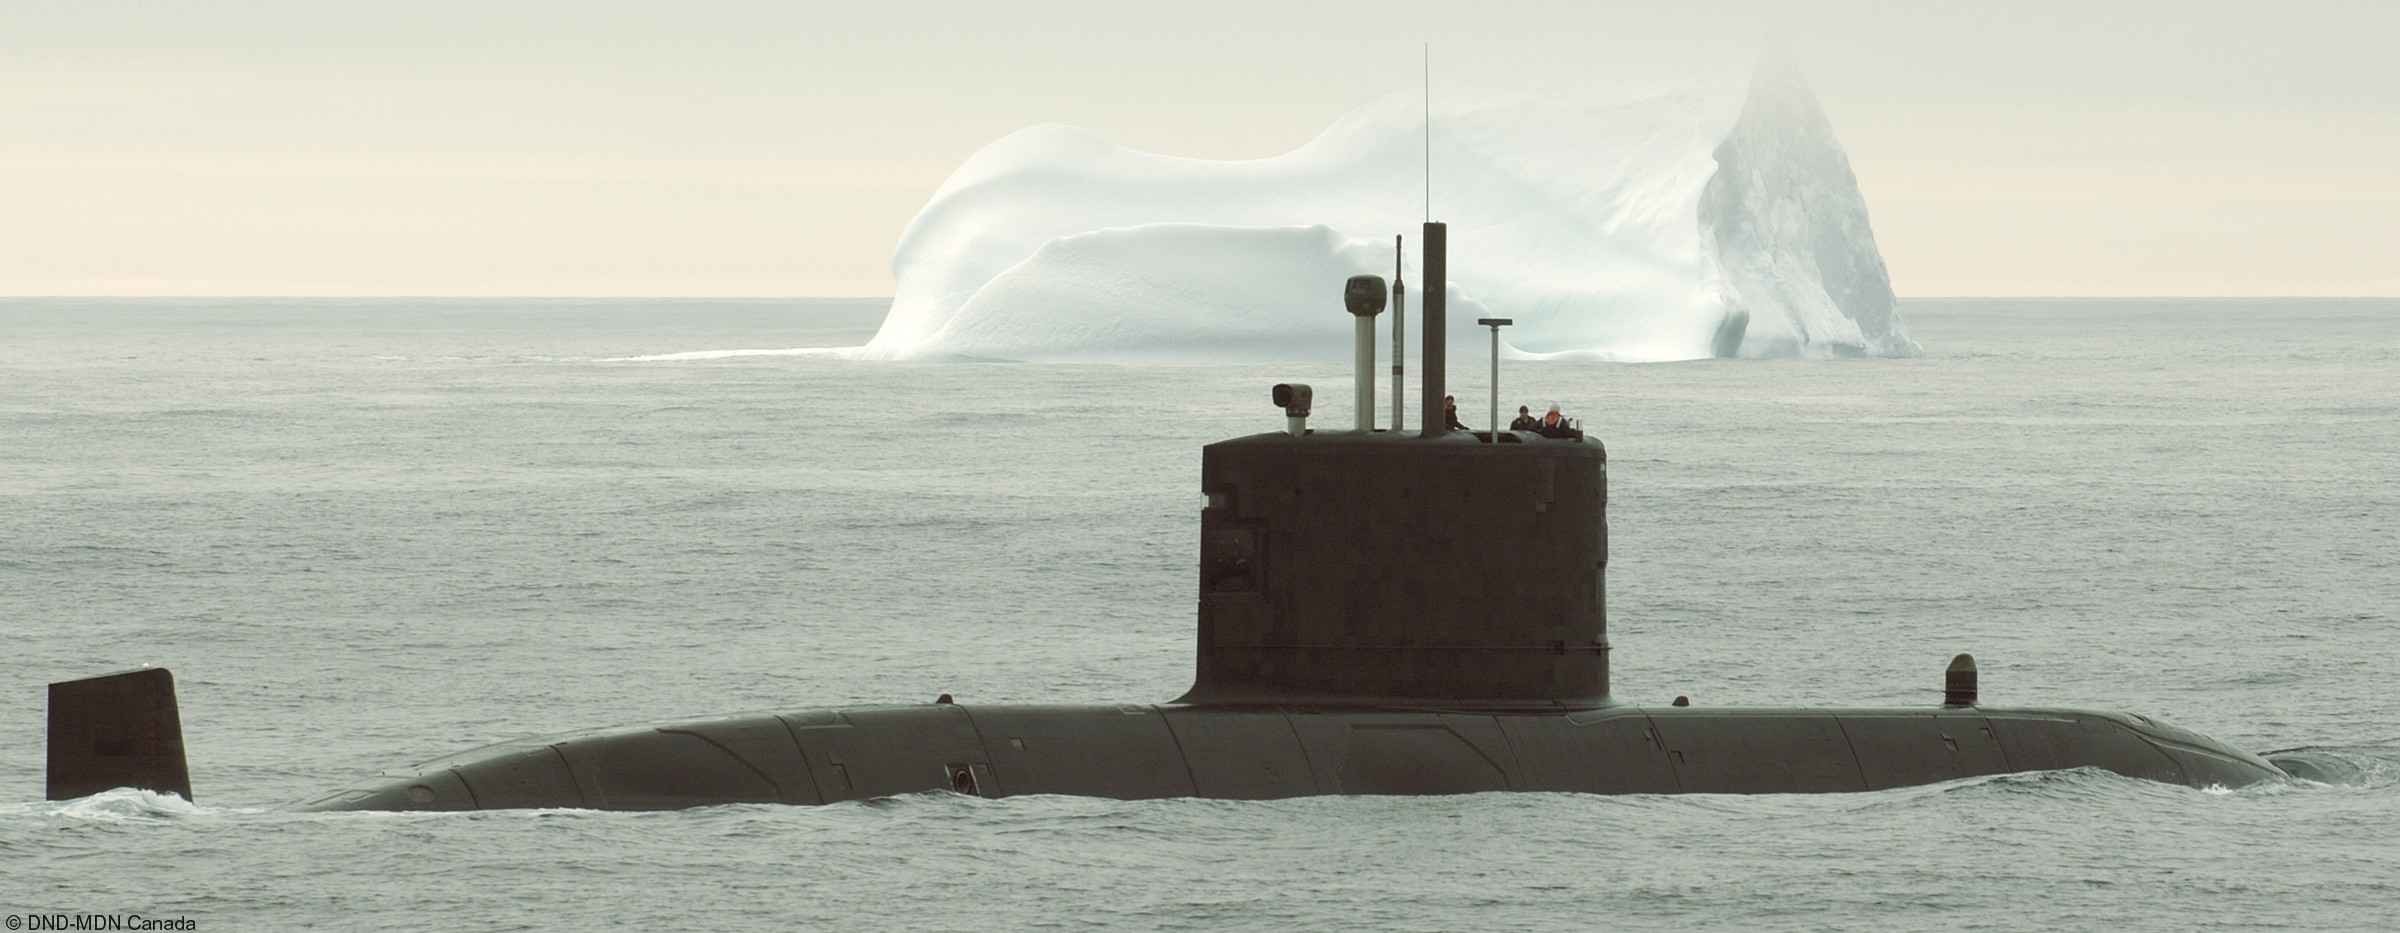 ssk-878 hmcs corner brook victoria upholder class patrol submarine ncsm royal canadian navy 18